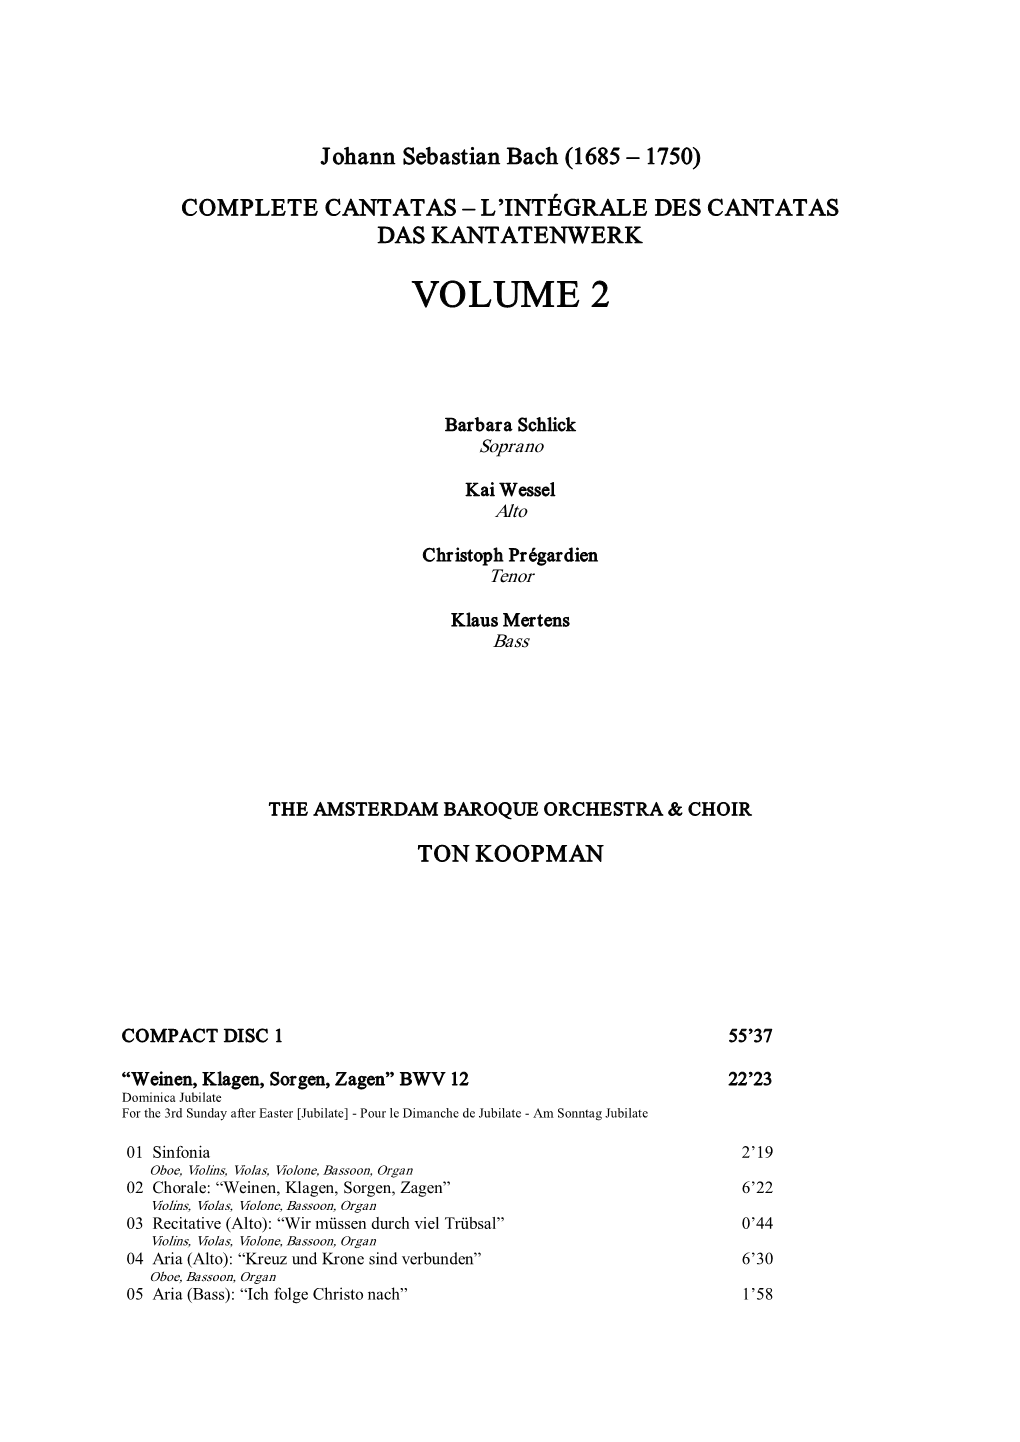 T. Koopman & Amsterdam Baroque Orchestra & Choir (Erato/Antoine Marchand, 3-CD)